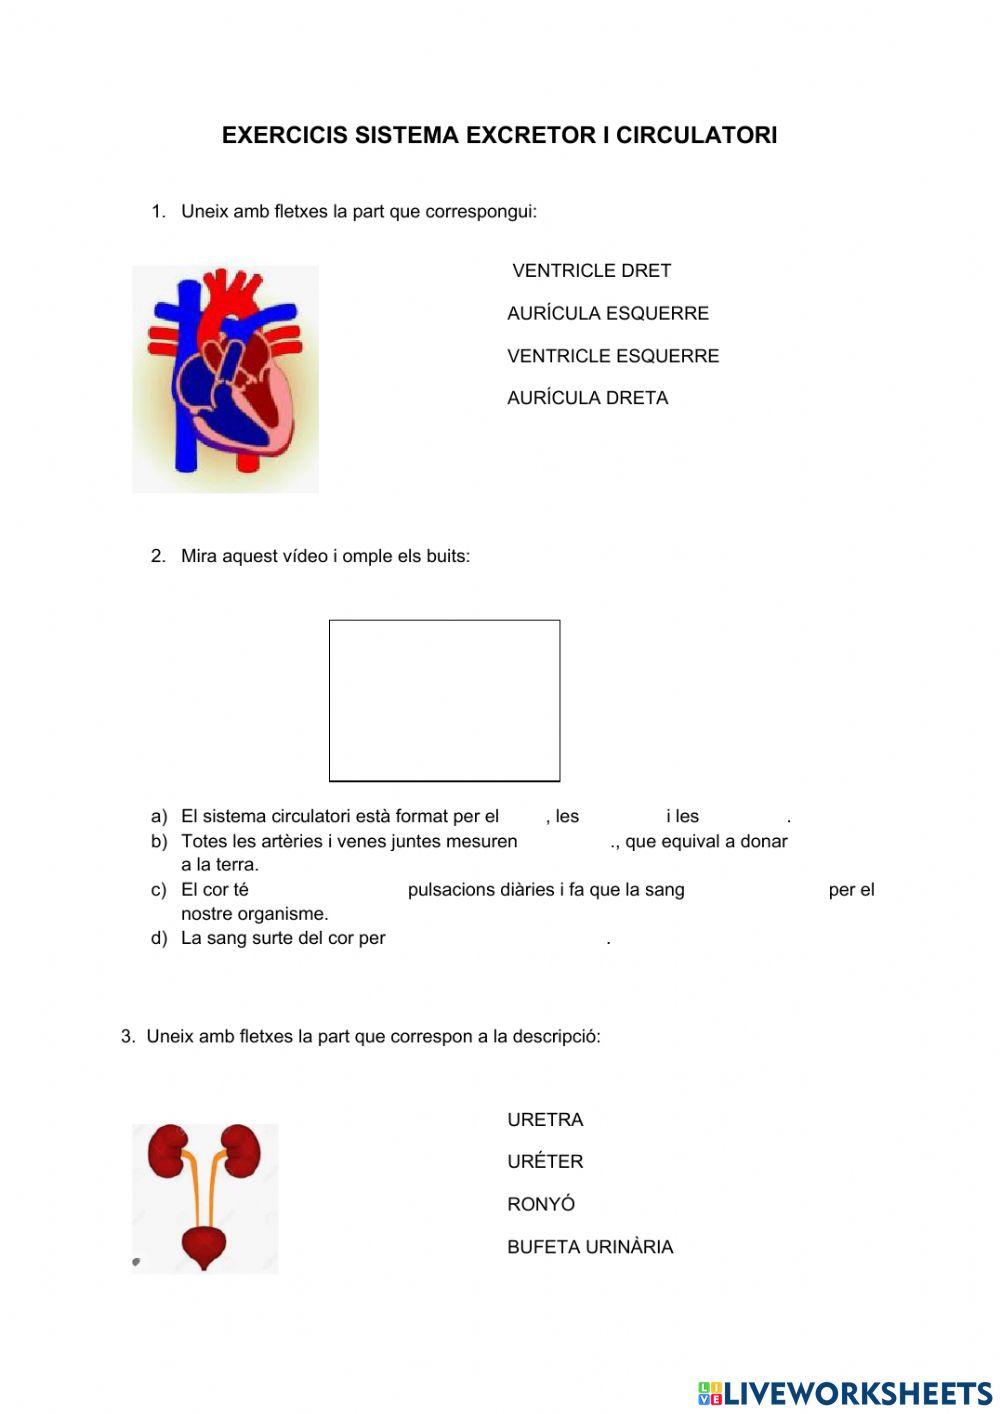 Sistema circulatori i excretor